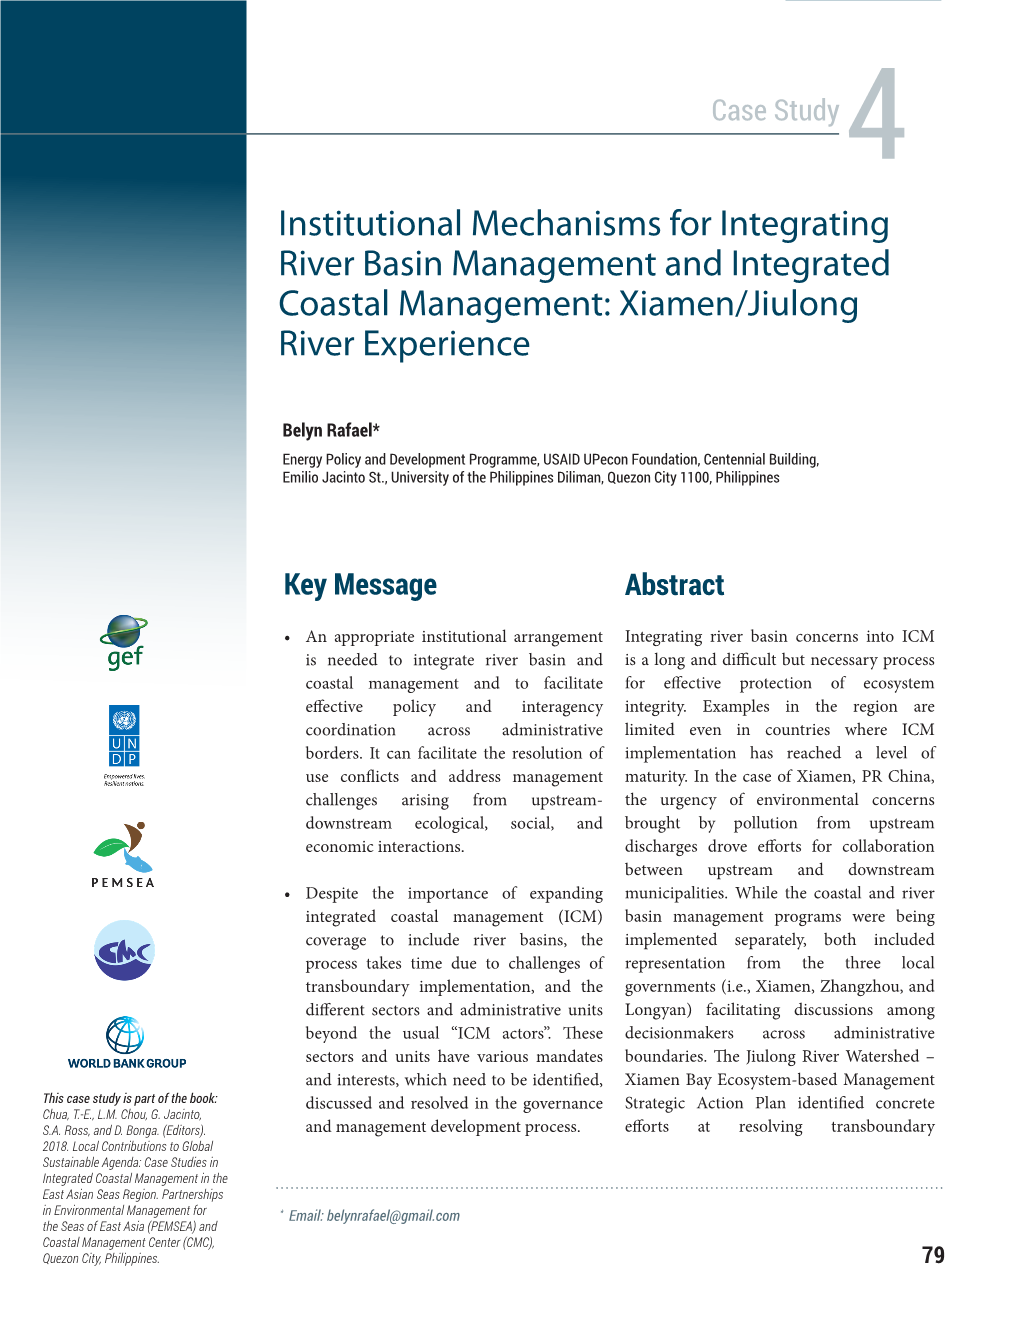 Institutional Mechanisms for Integrating River Basin